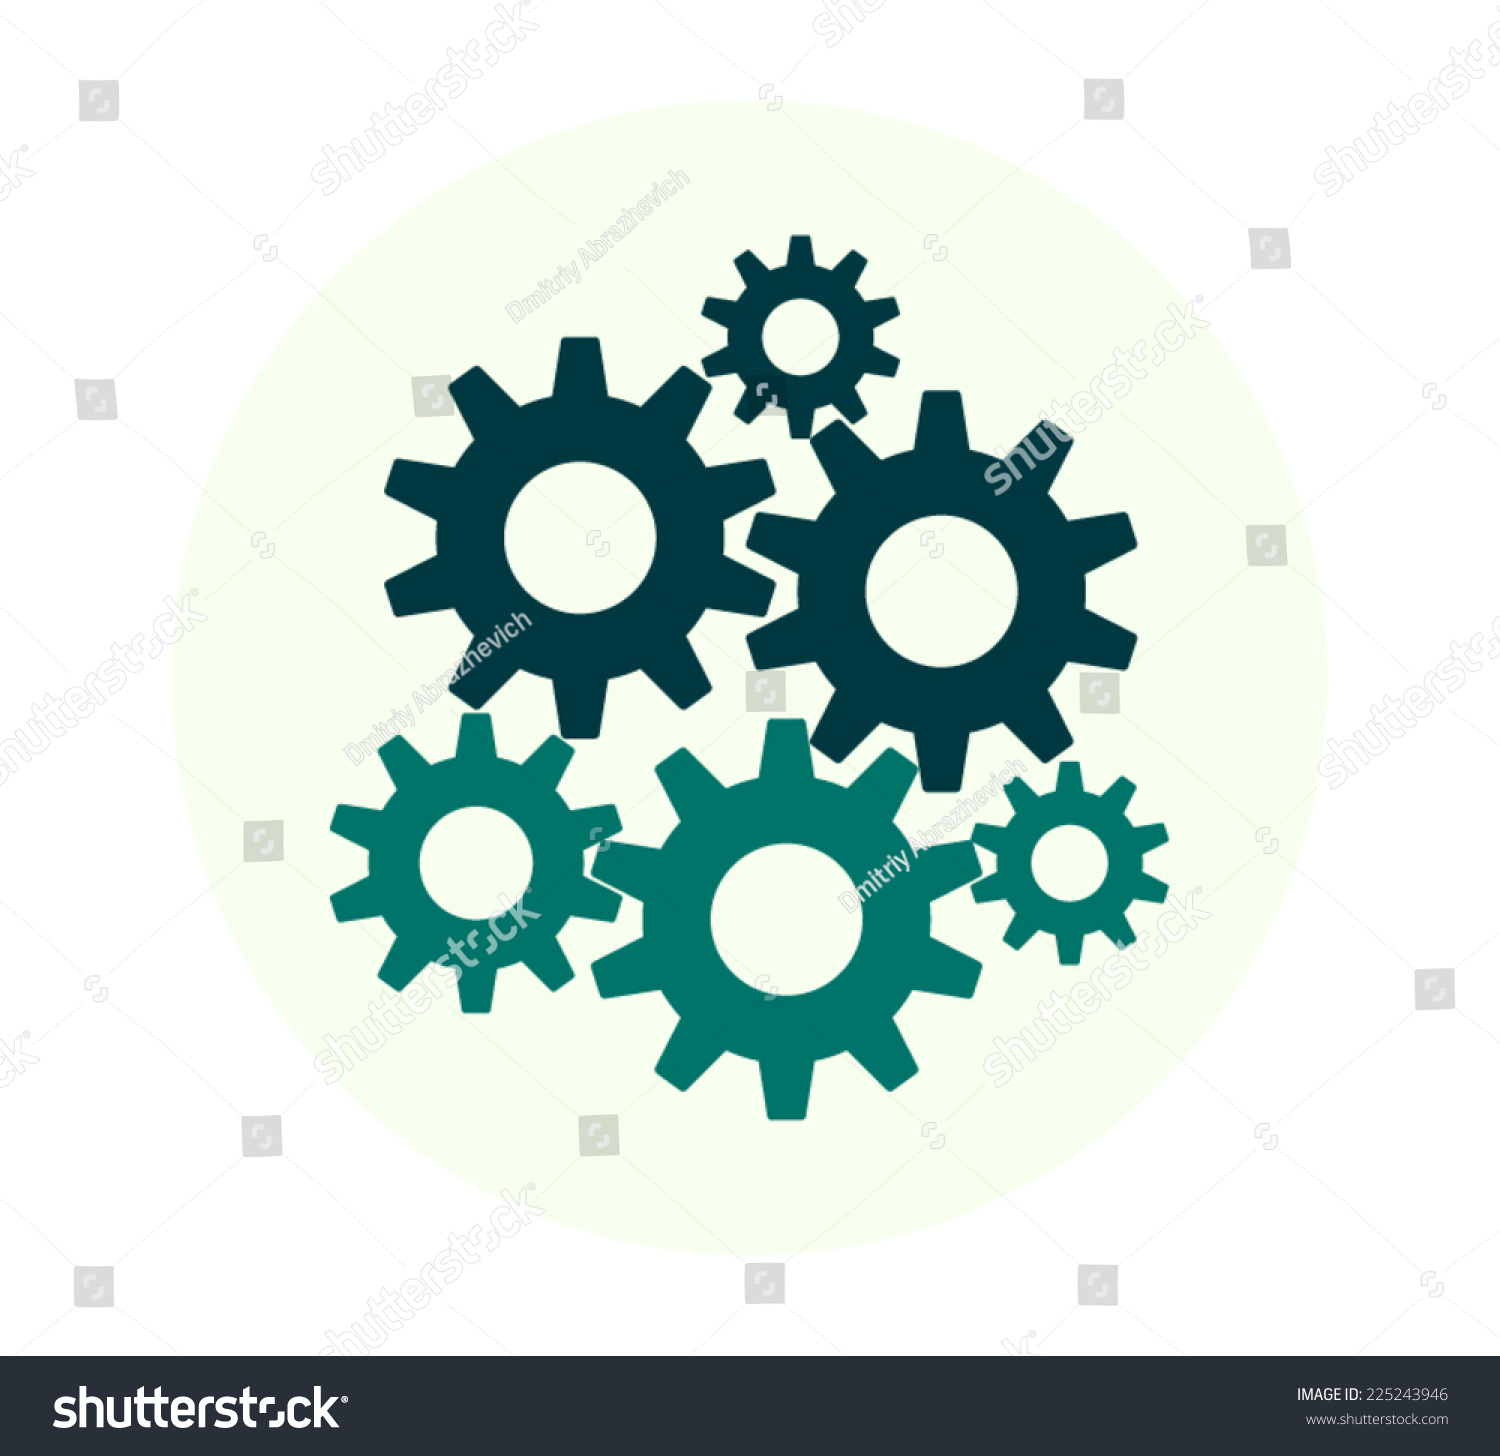 Colorful Cogwheels Flat Design Stock Vector 225243946 - Shutterstock